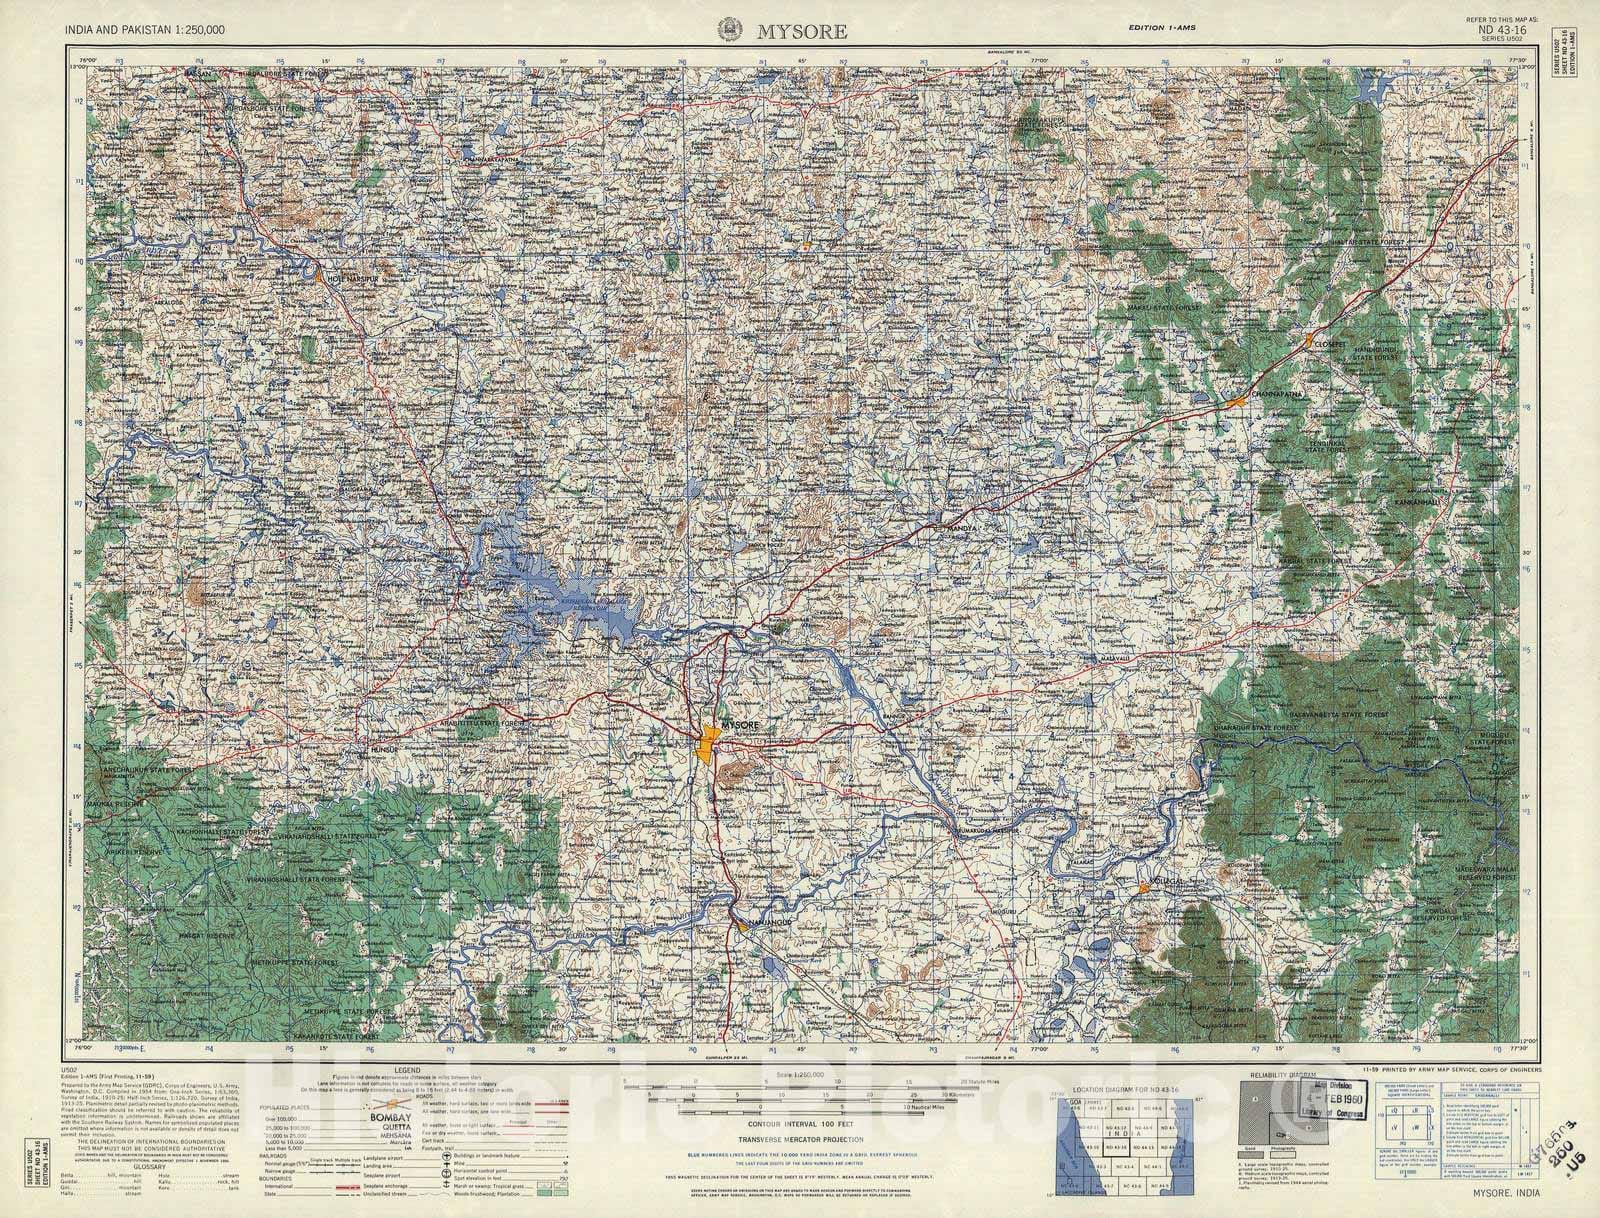 Historic 1955 Map - India and Pakistan 1:250,000. - Mysore, 1959